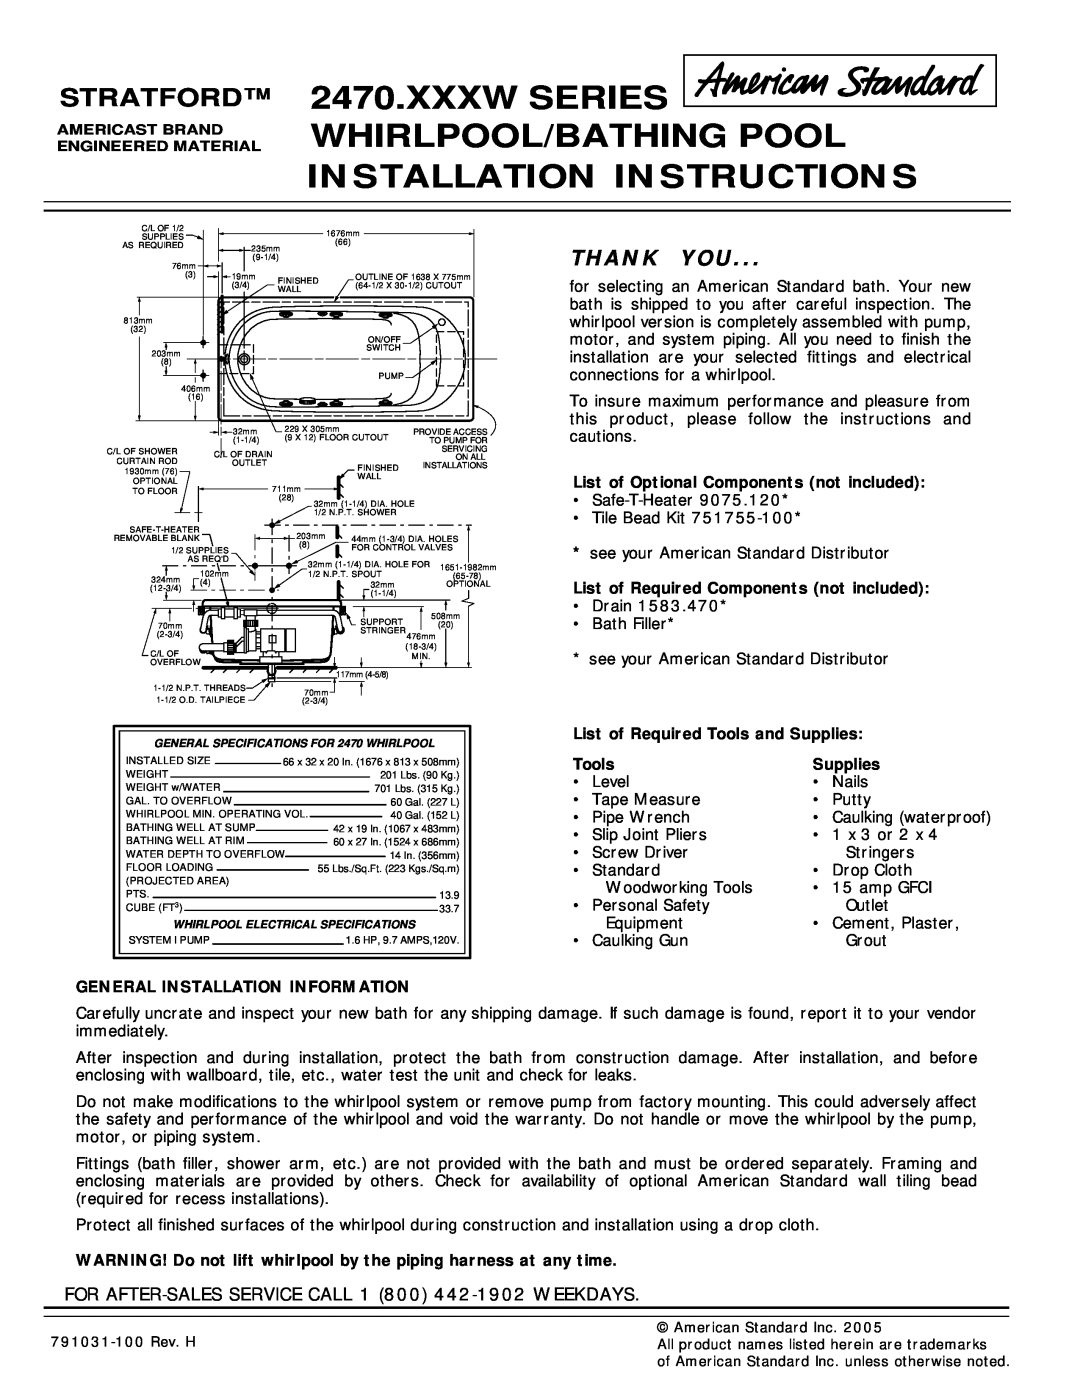 American Standard 2470.XXXW installation instructions Xxxw Series Whirlpool/Bathing Pool, Installation Instructions, Tools 